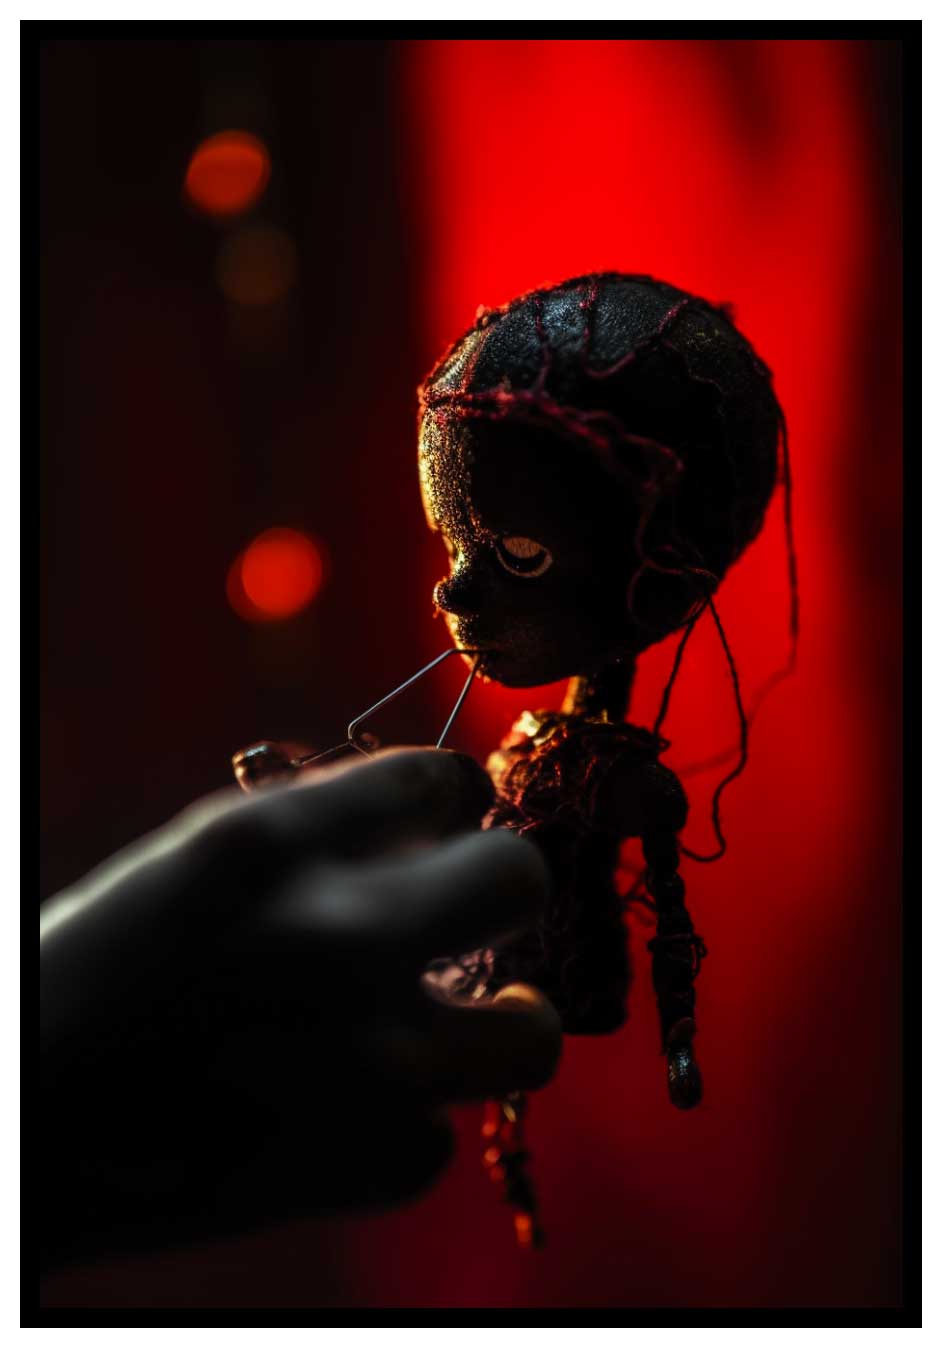 Padrona della bambola voodoo - Poster rosso spaventoso